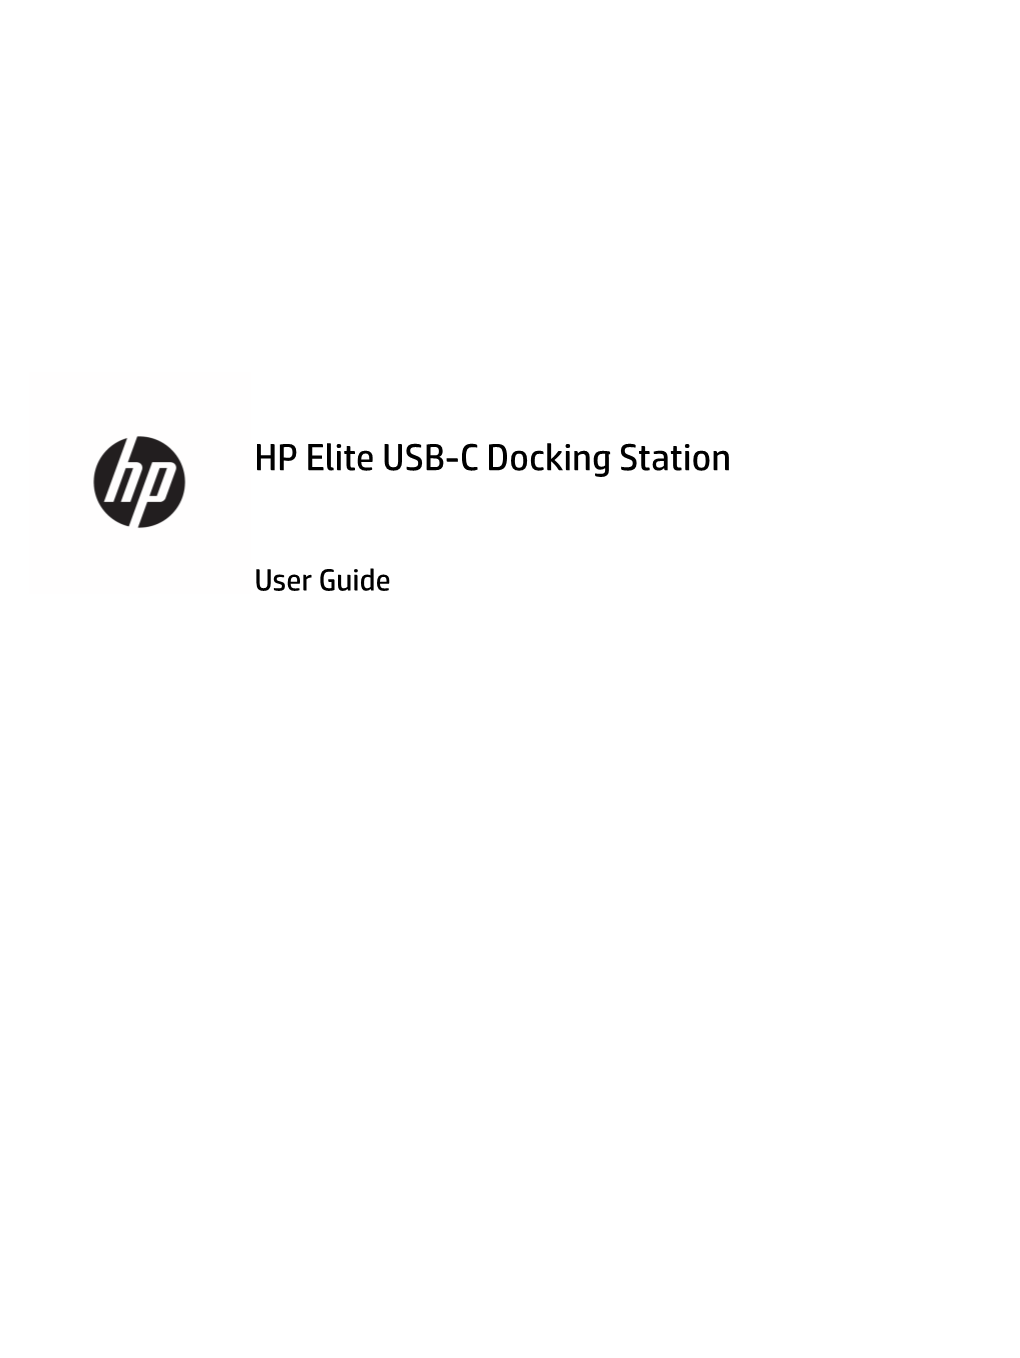 HP Elite USB-C Docking Station User Guide